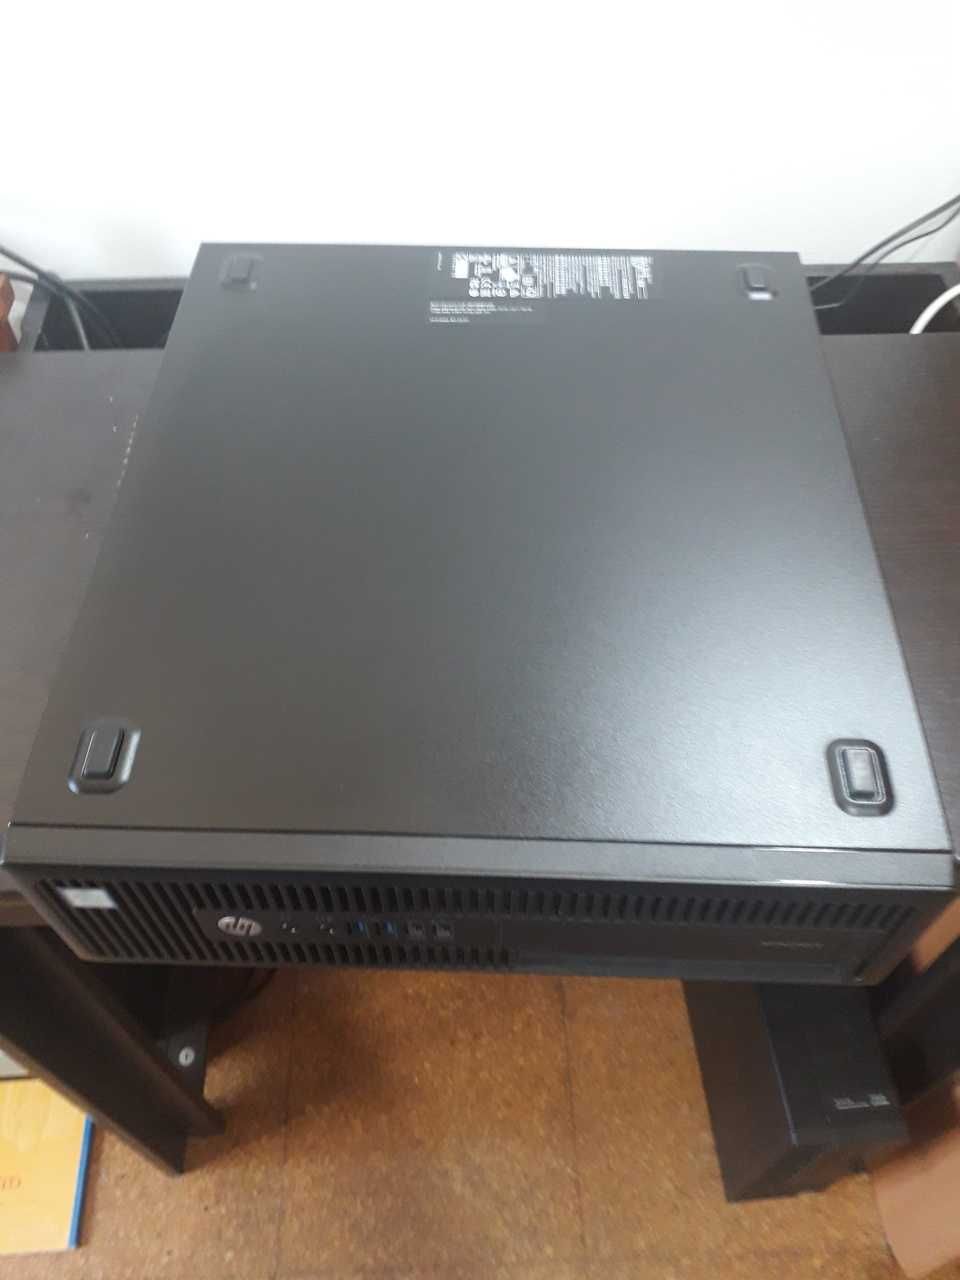 Computador HP EliteDesk 800g2 com avaria na board aspecto como novo